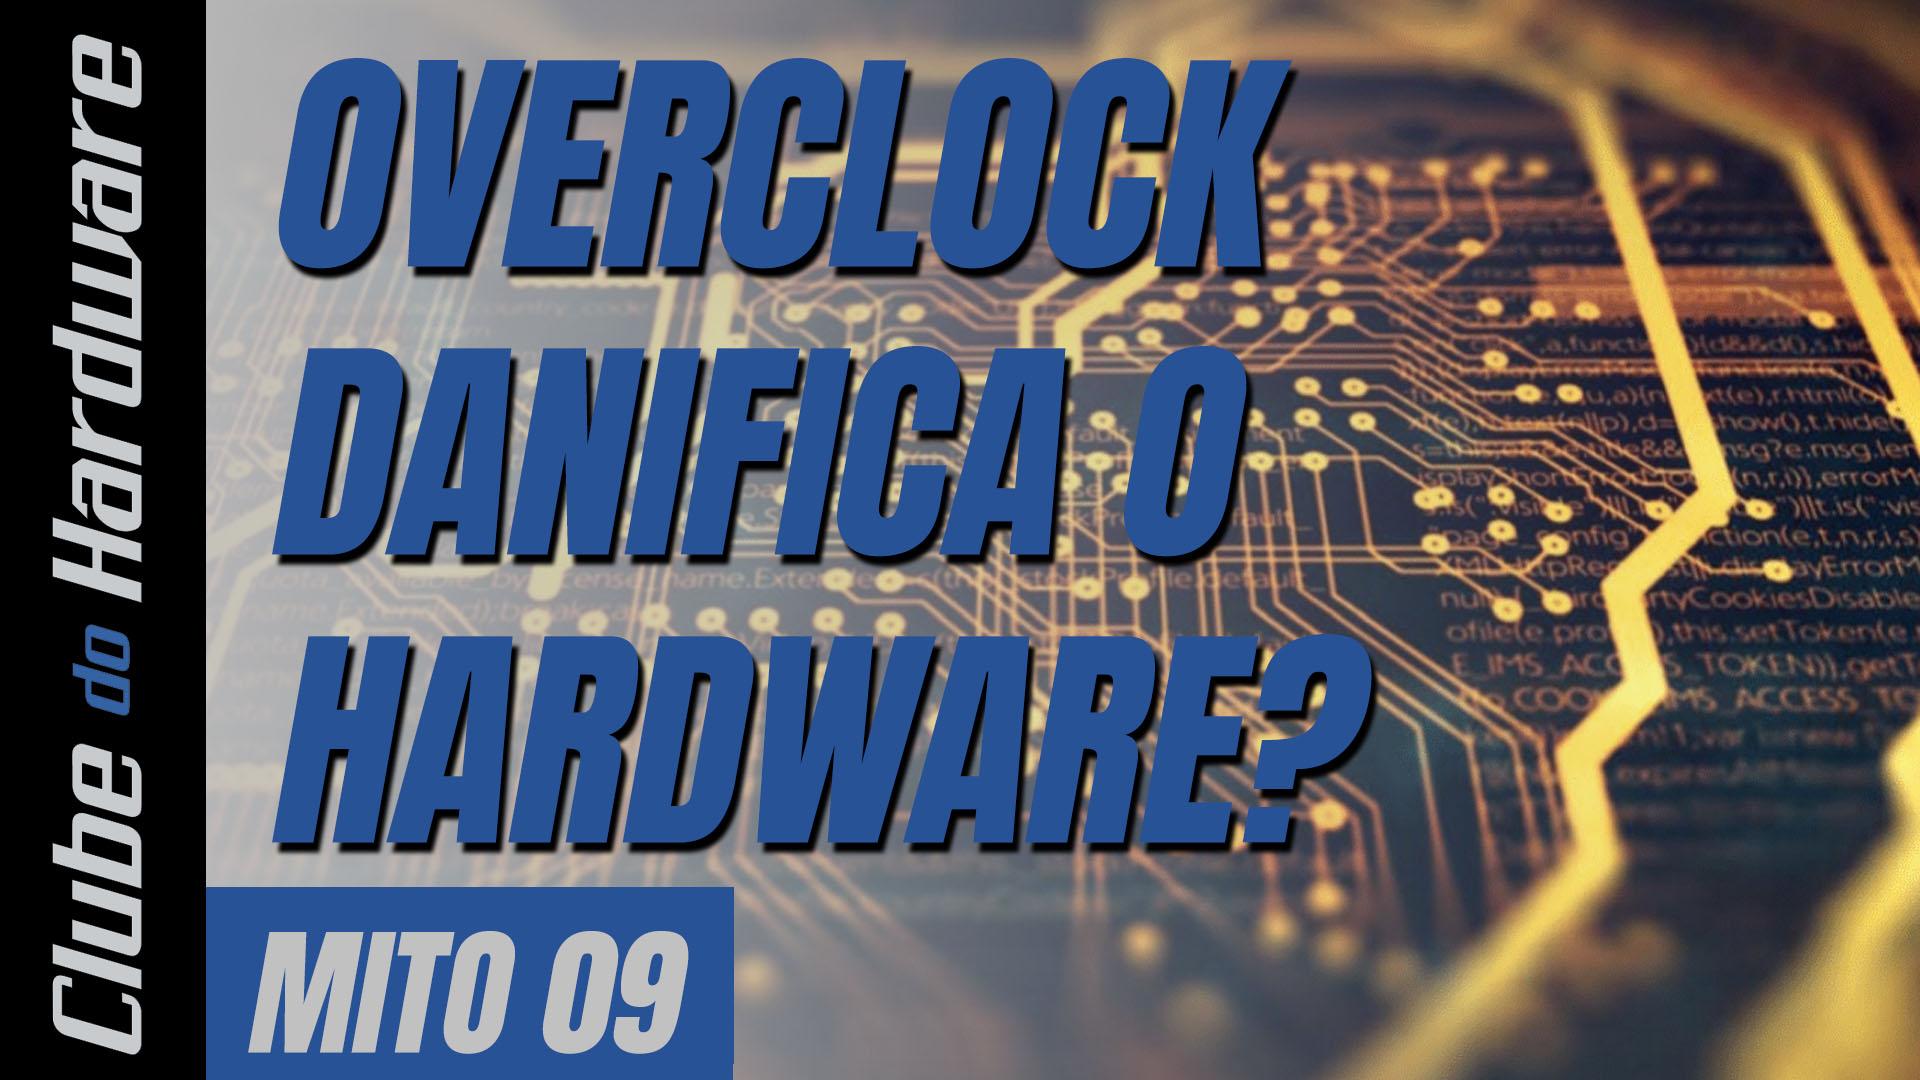 Mitos do hardware #09: overclock danifica o hardware?